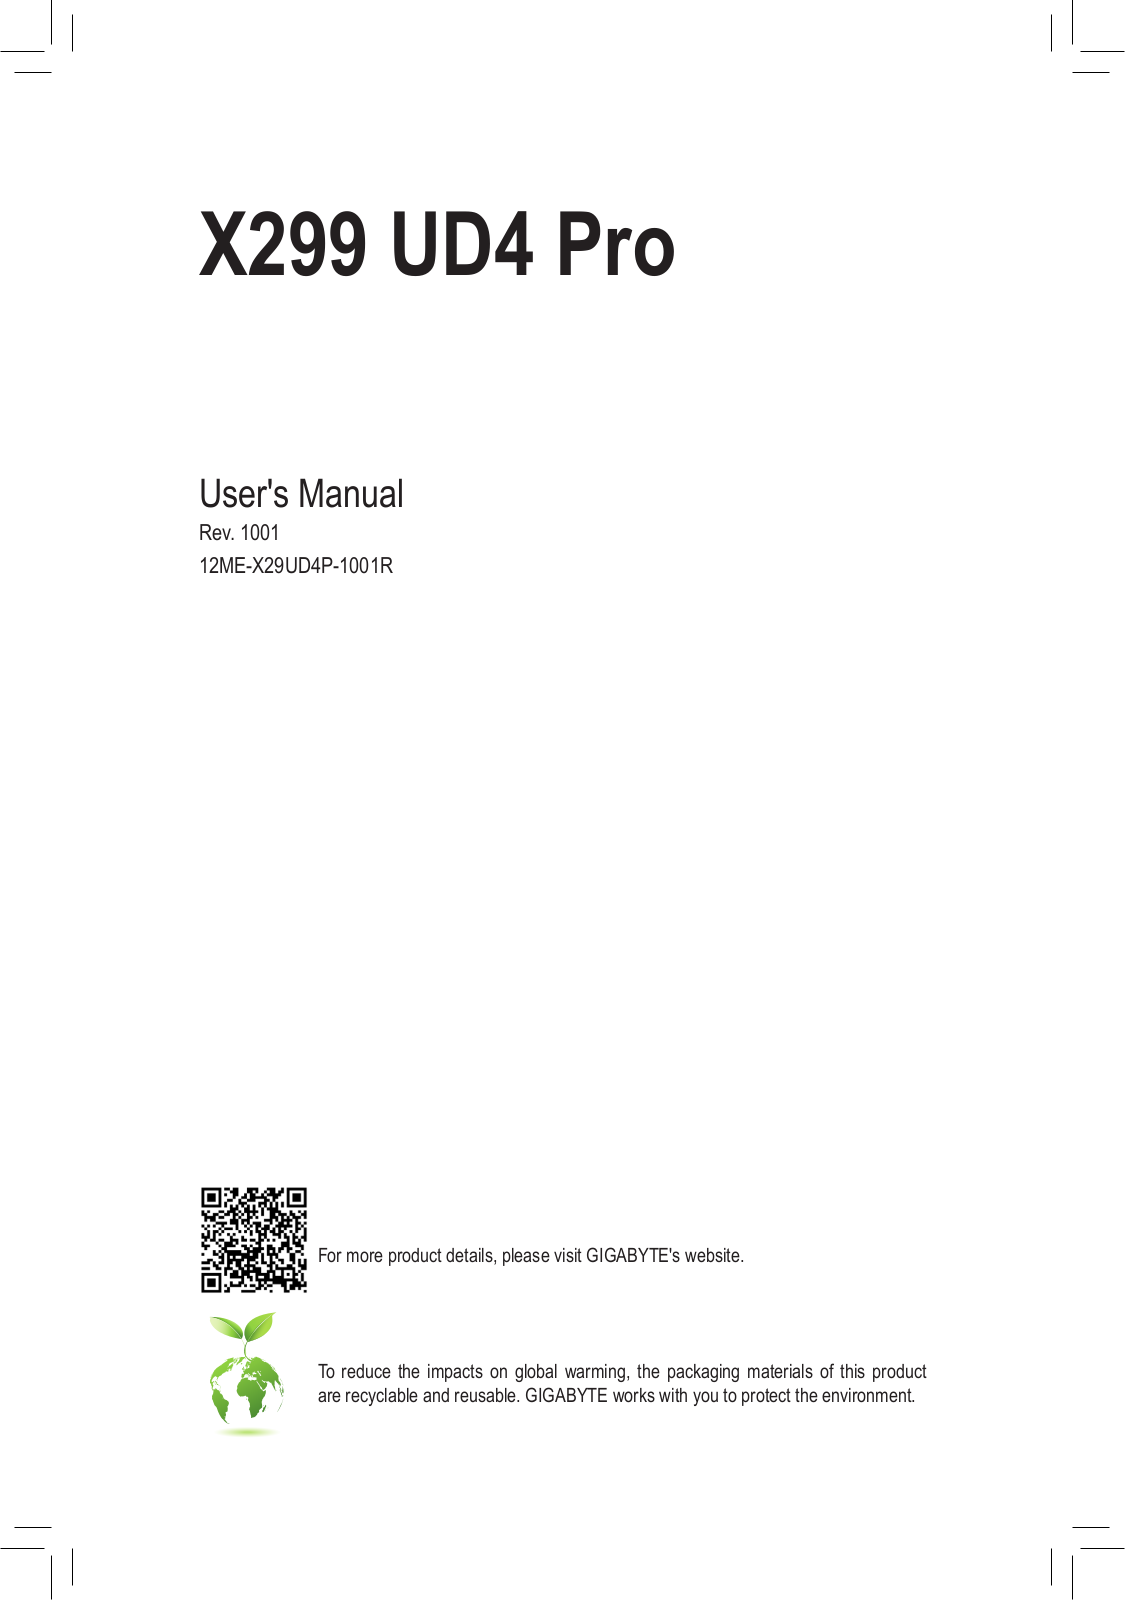 Gigabyte X299 UD4 Pro Service Manual